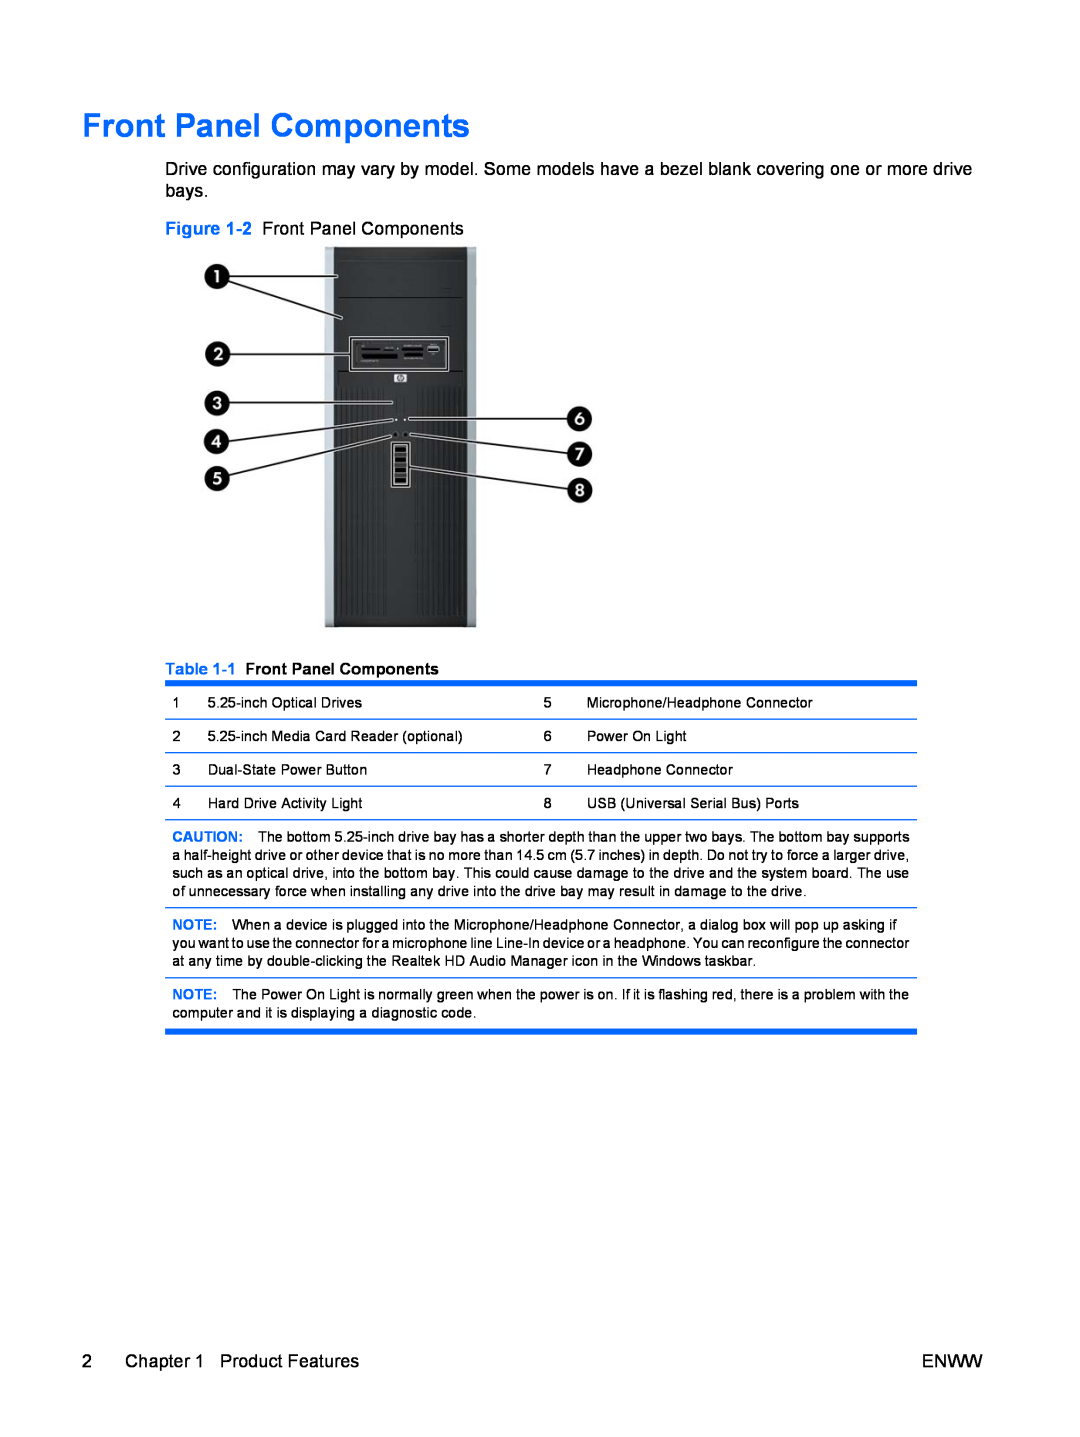 Hitachi 8000 Elite manual 2 Front Panel Components, Product Features, Enww, 1 Front Panel Components 